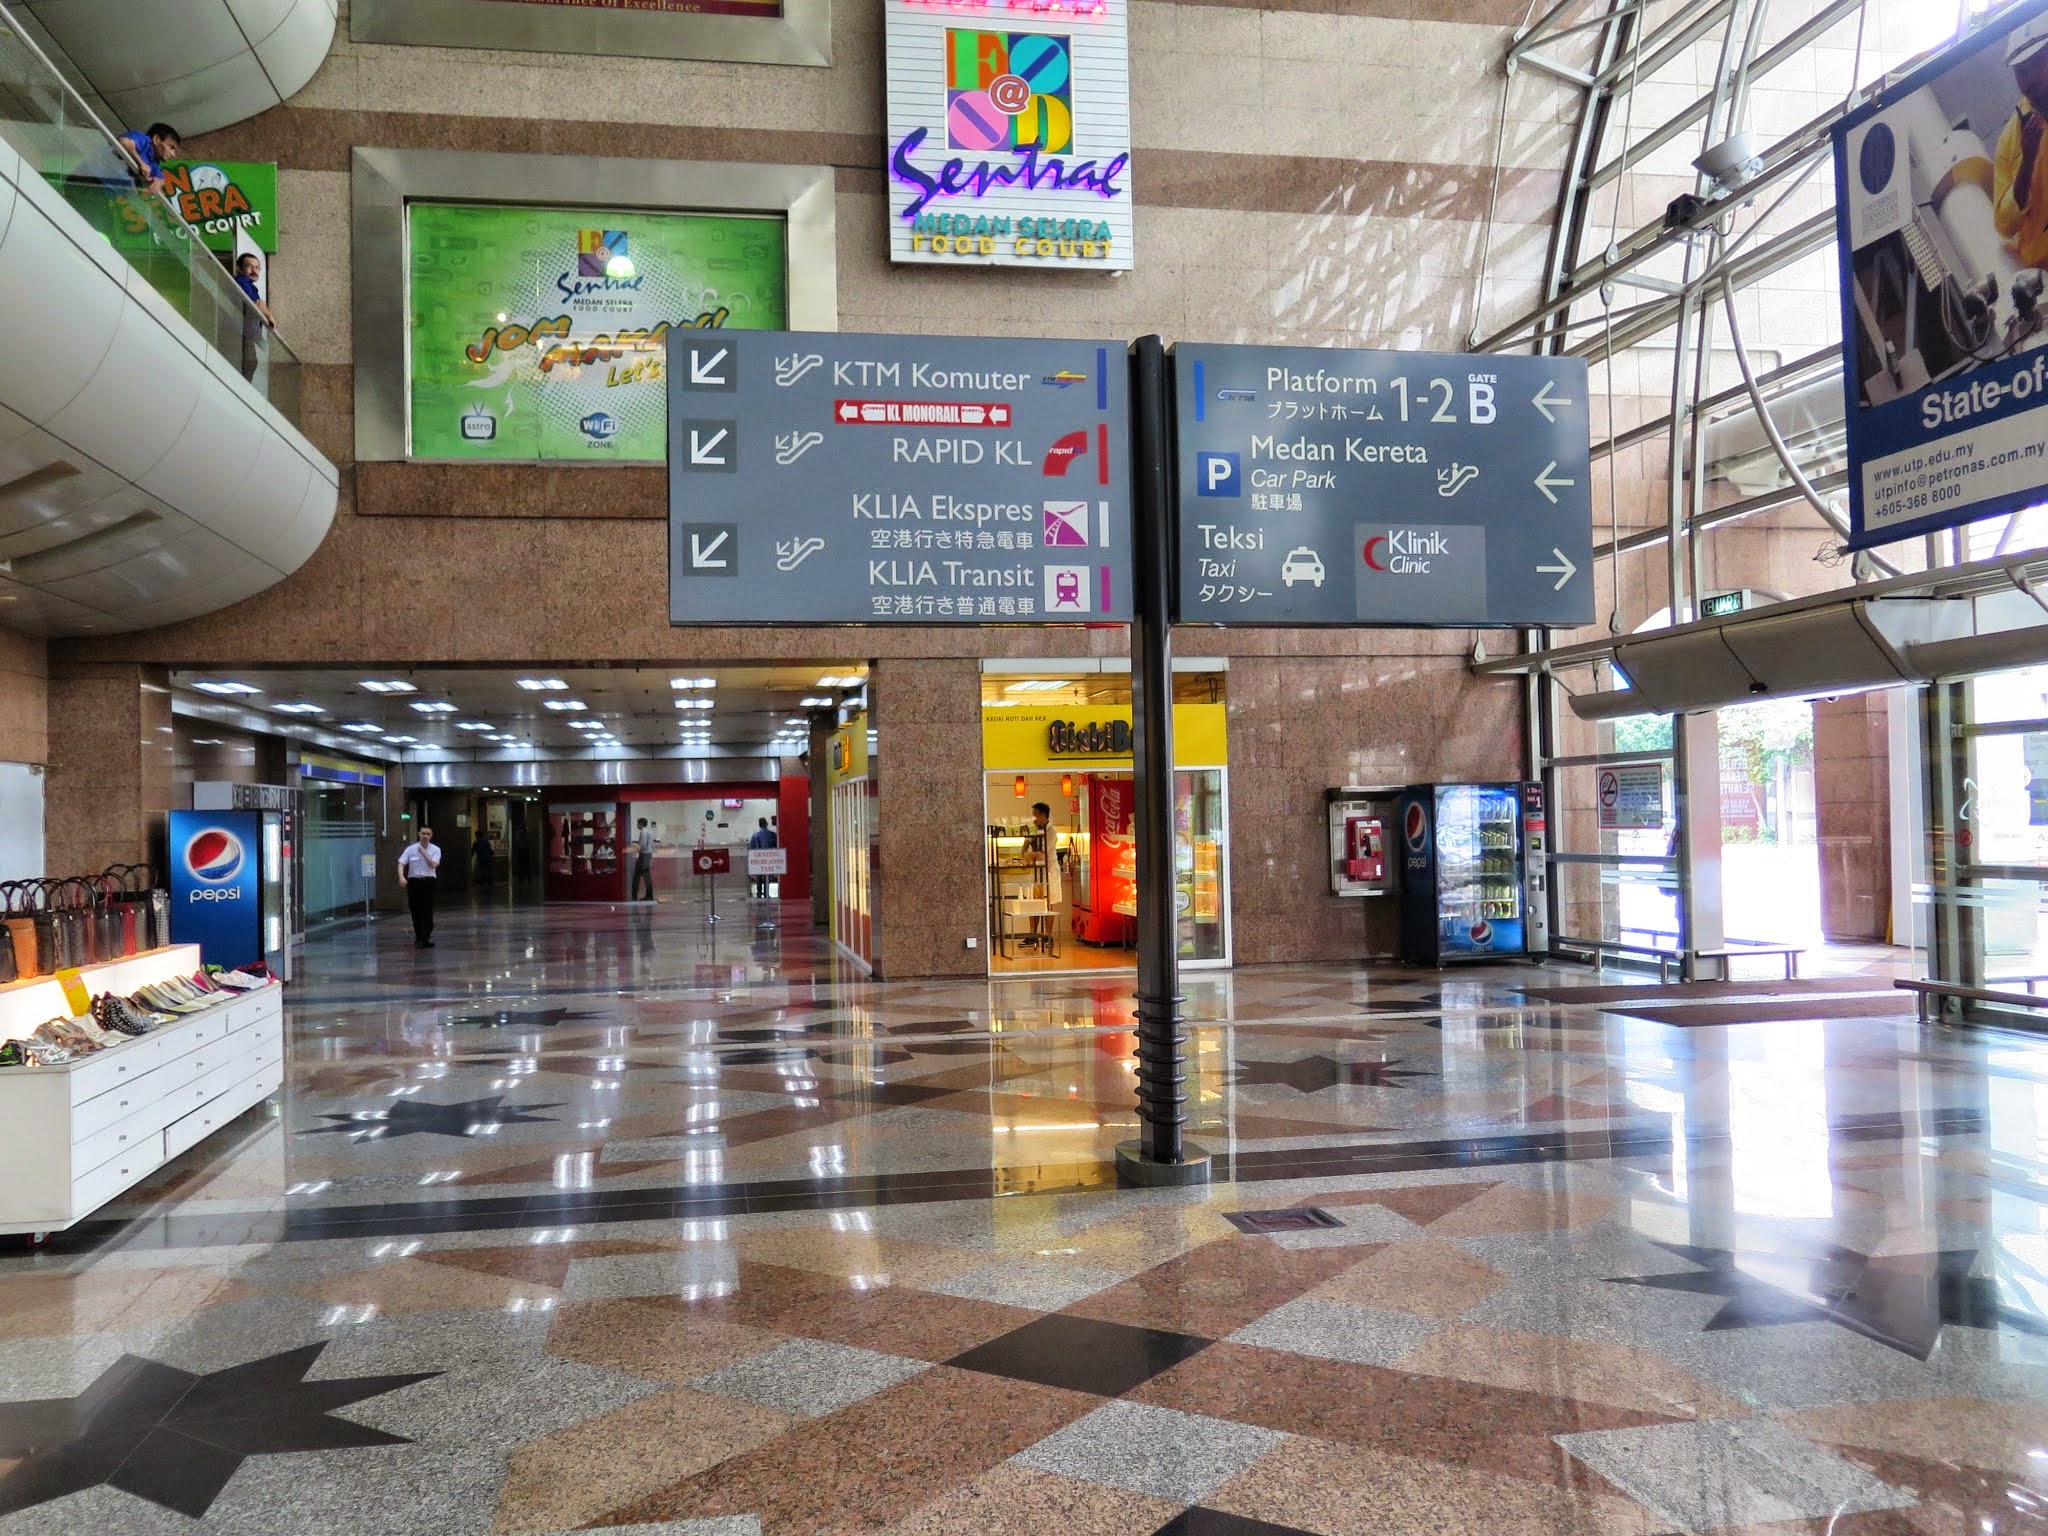 Stesen Sentral Kuala Lumpur, transport hub that links KL metropolitan